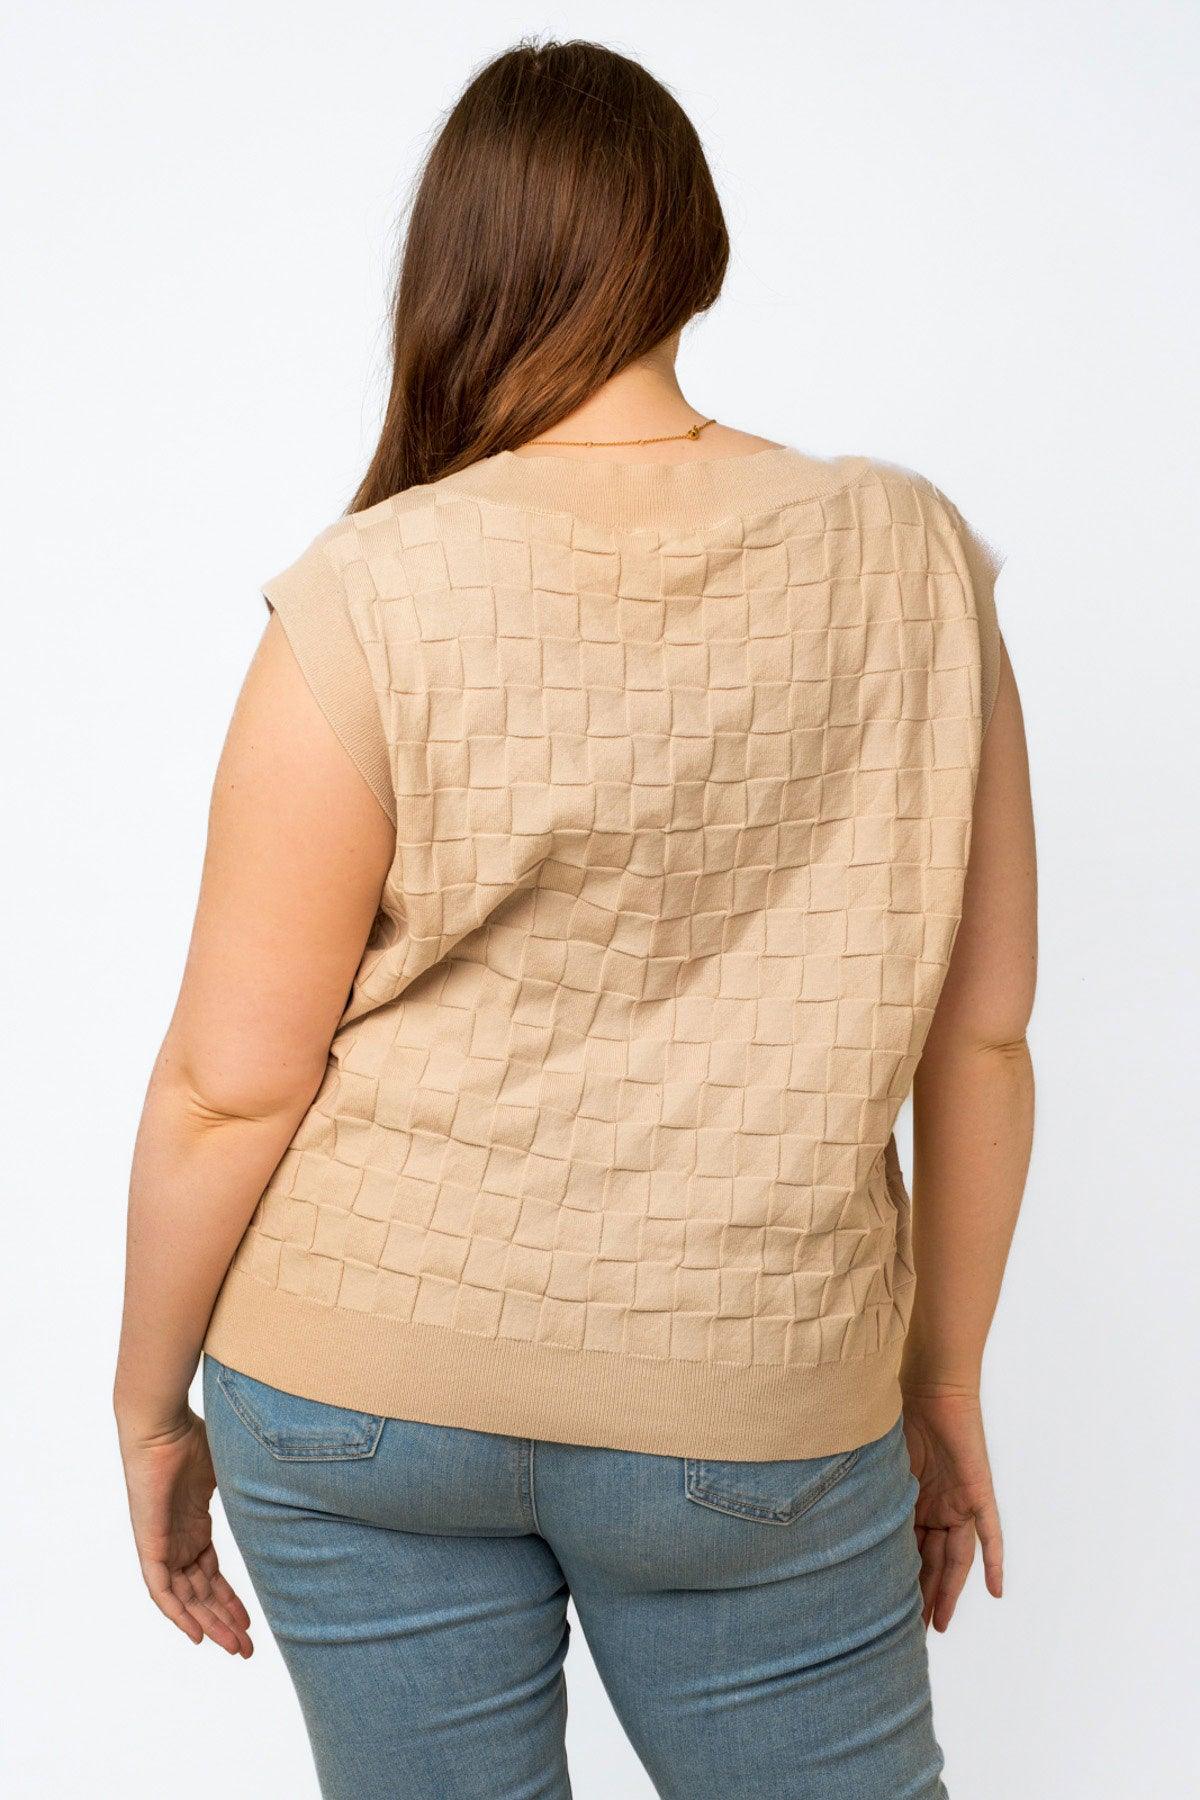 Plus Size Checkered Texture V-Neck Sweater Vest - Tasha Apparel Wholesale